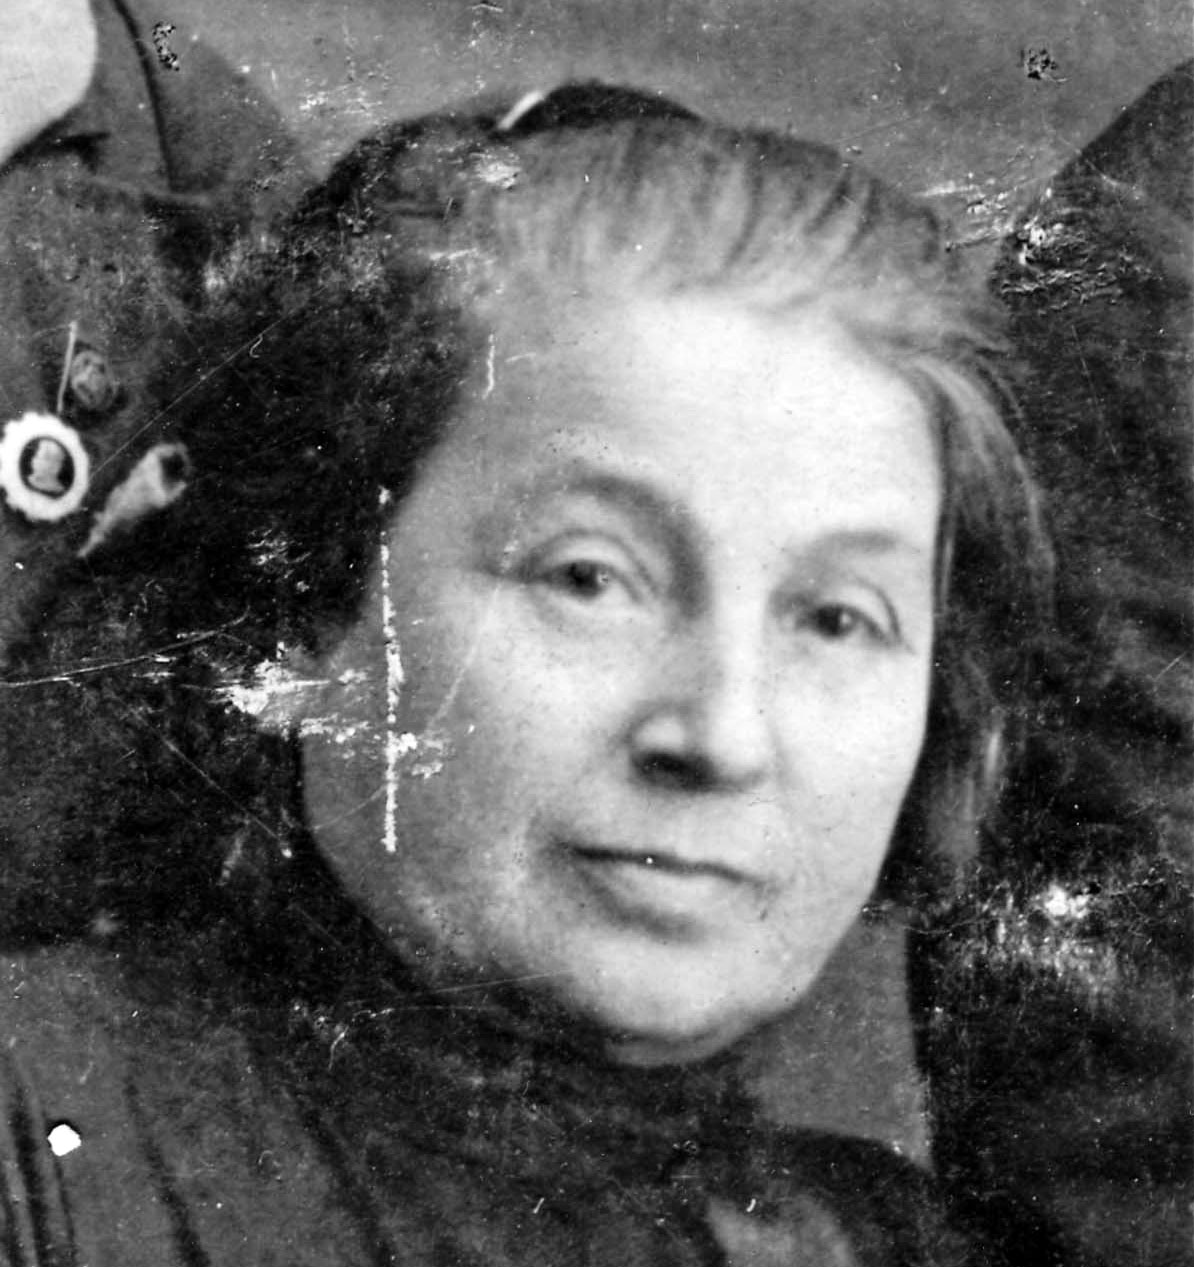 Berta Lisyanskaya was born in 1887. She lived in Kiev, Ukraine and was murdered in September 1941 at Babi Yar.